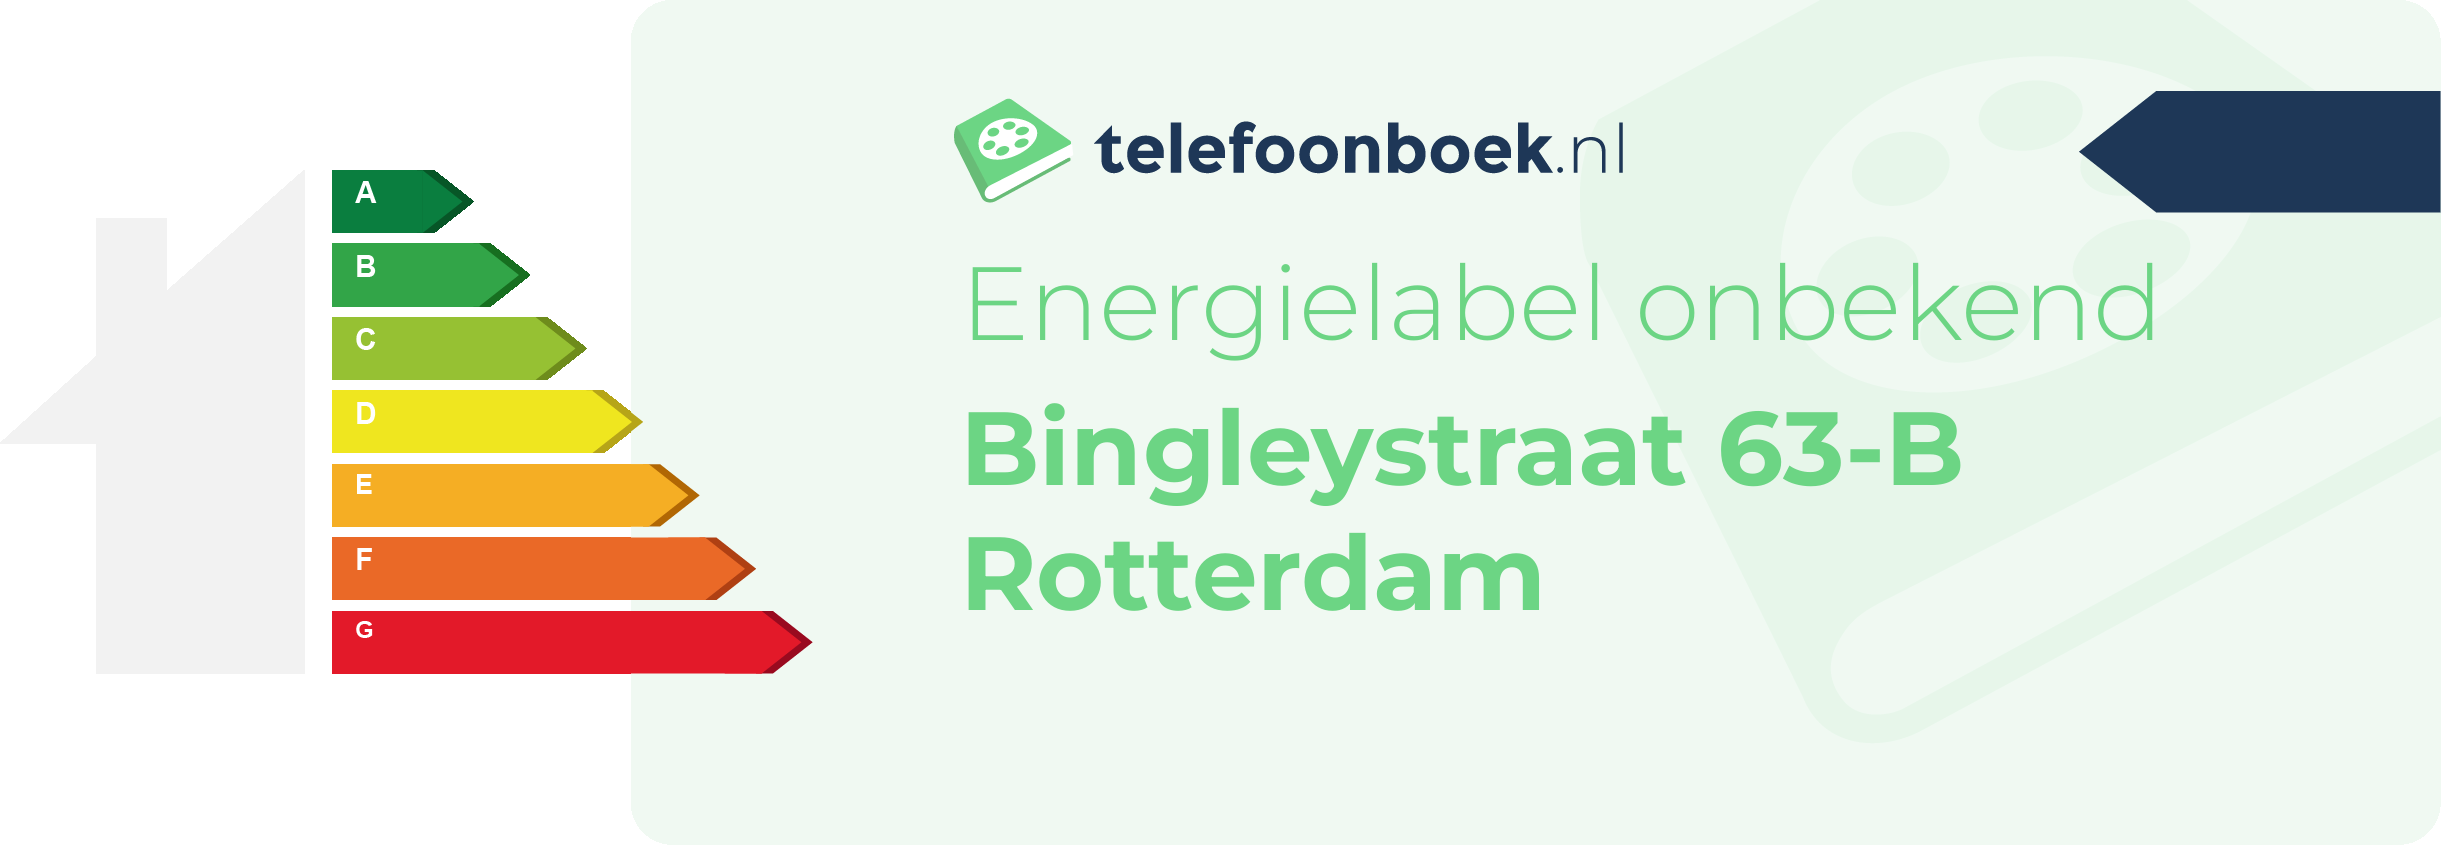 Energielabel Bingleystraat 63-B Rotterdam